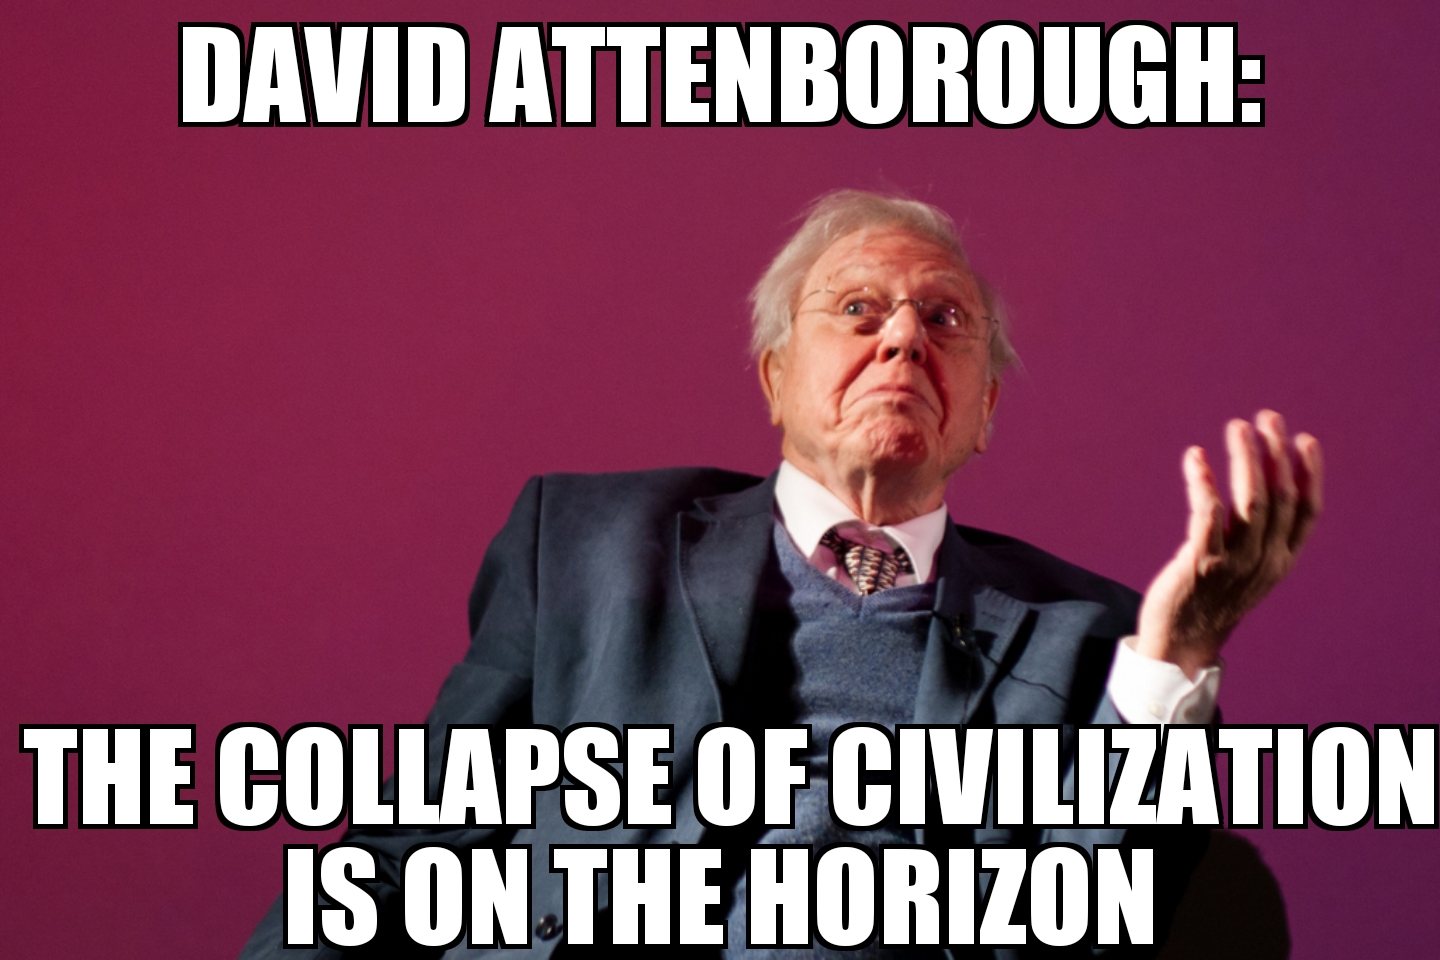 David Attenborough warns of collapse of civilization